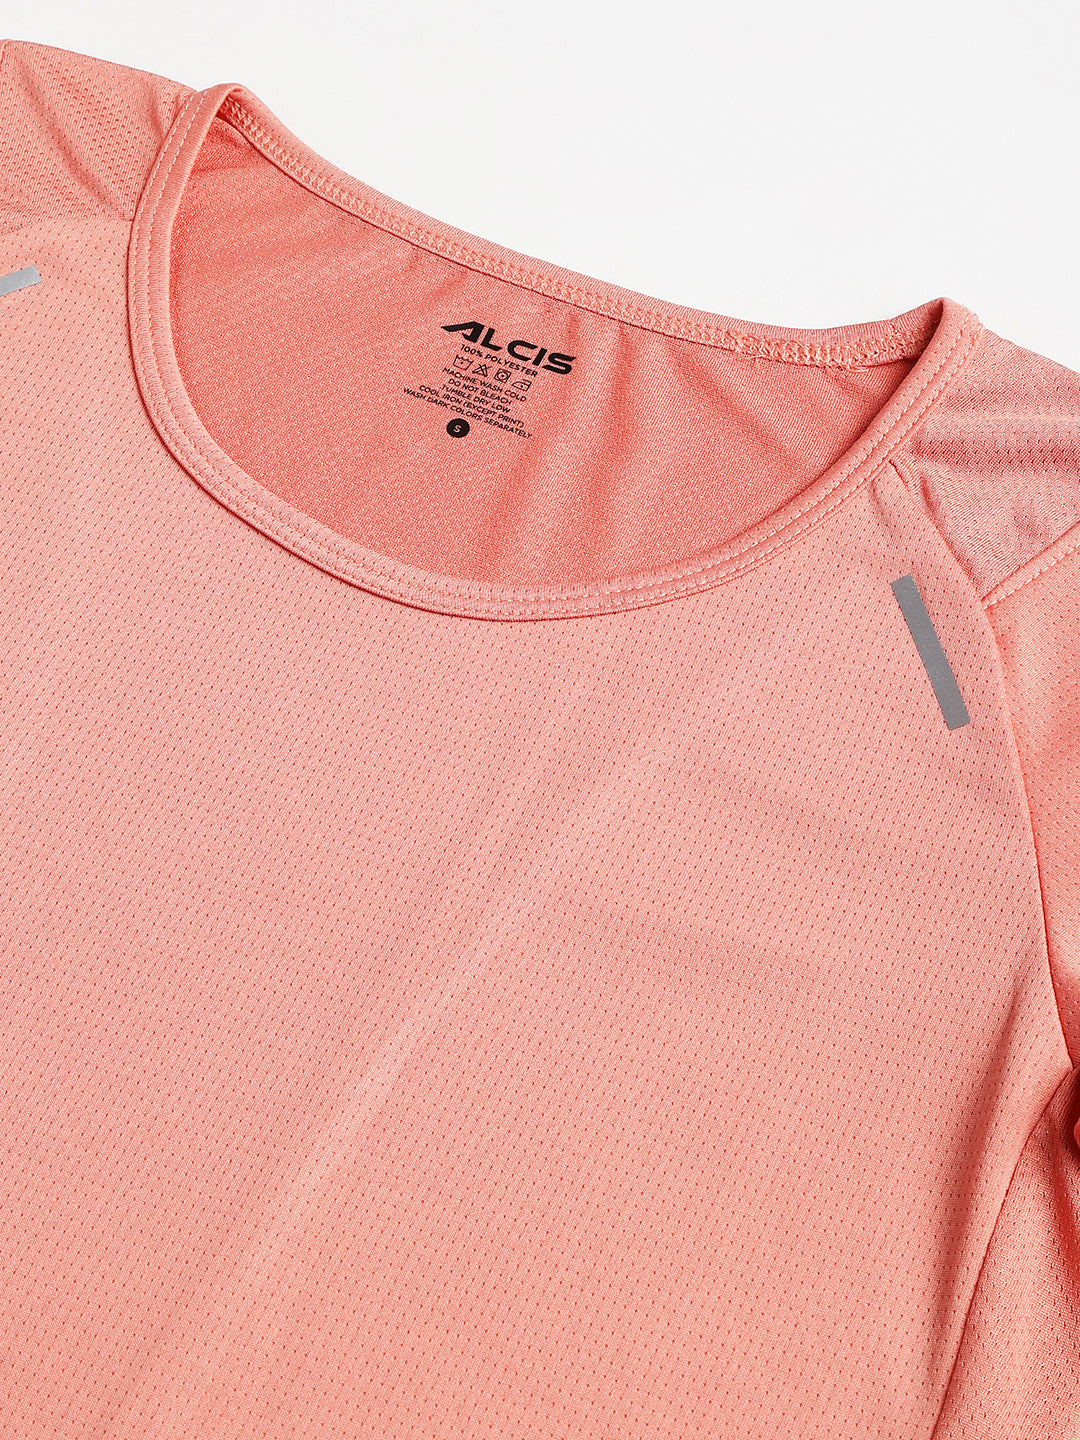 Alcis Women Rosette Anti-Static Slim-Fit Round Neck Sustainable Pro-Run Training T-Shirt